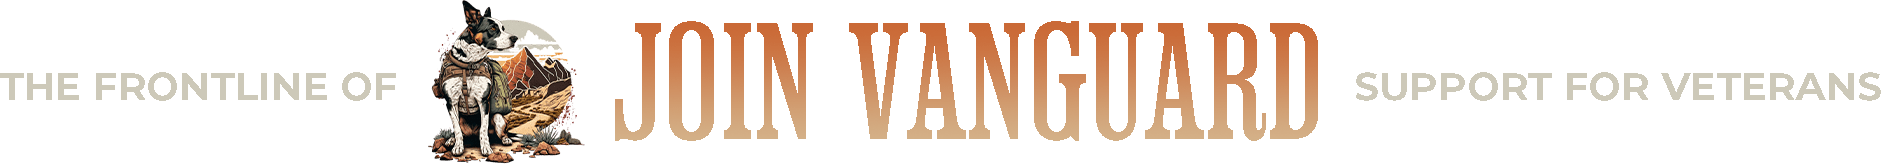 Join Vanguard - The Frontline of Support for Veterans